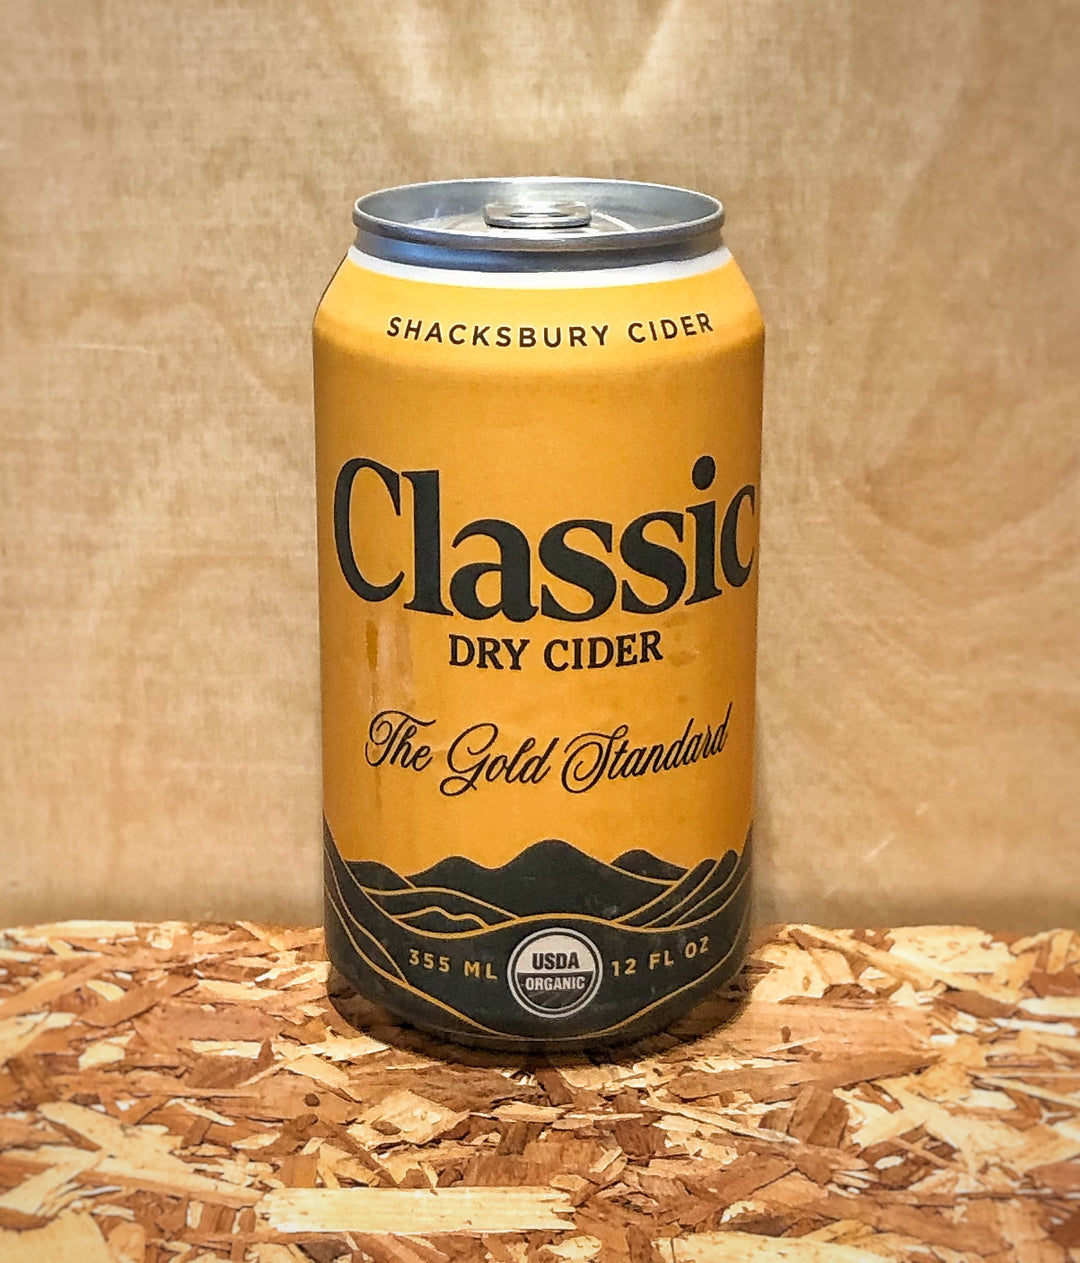 Shacksbury Cider 'Classic' Dry Cider (Vergennes, VT)